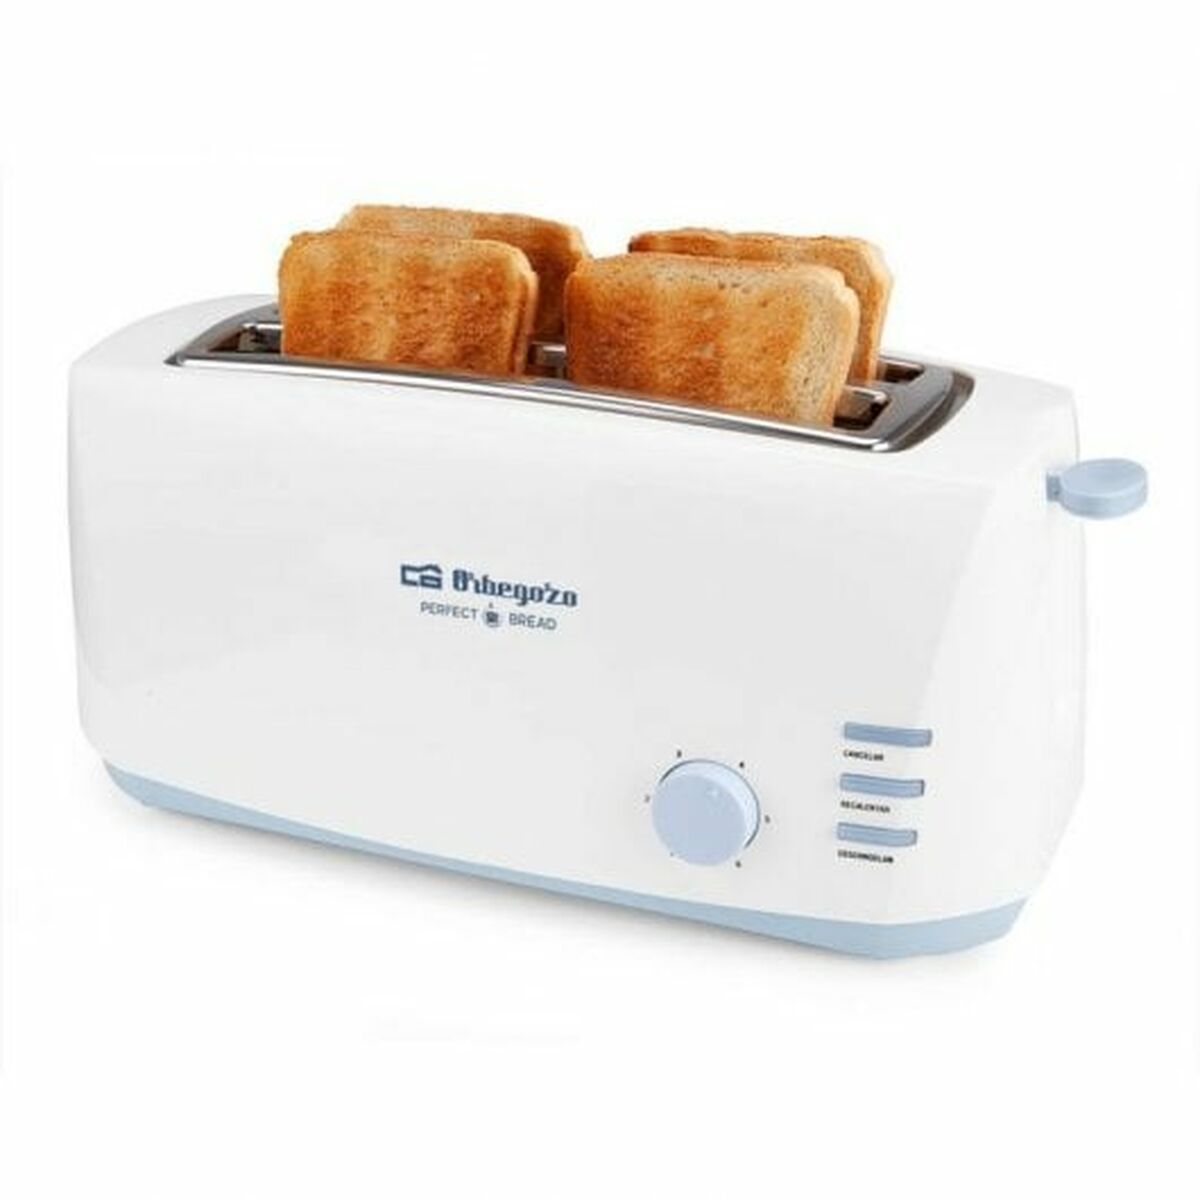 Toaster Orbegozo 17742 1400 W - CA International  